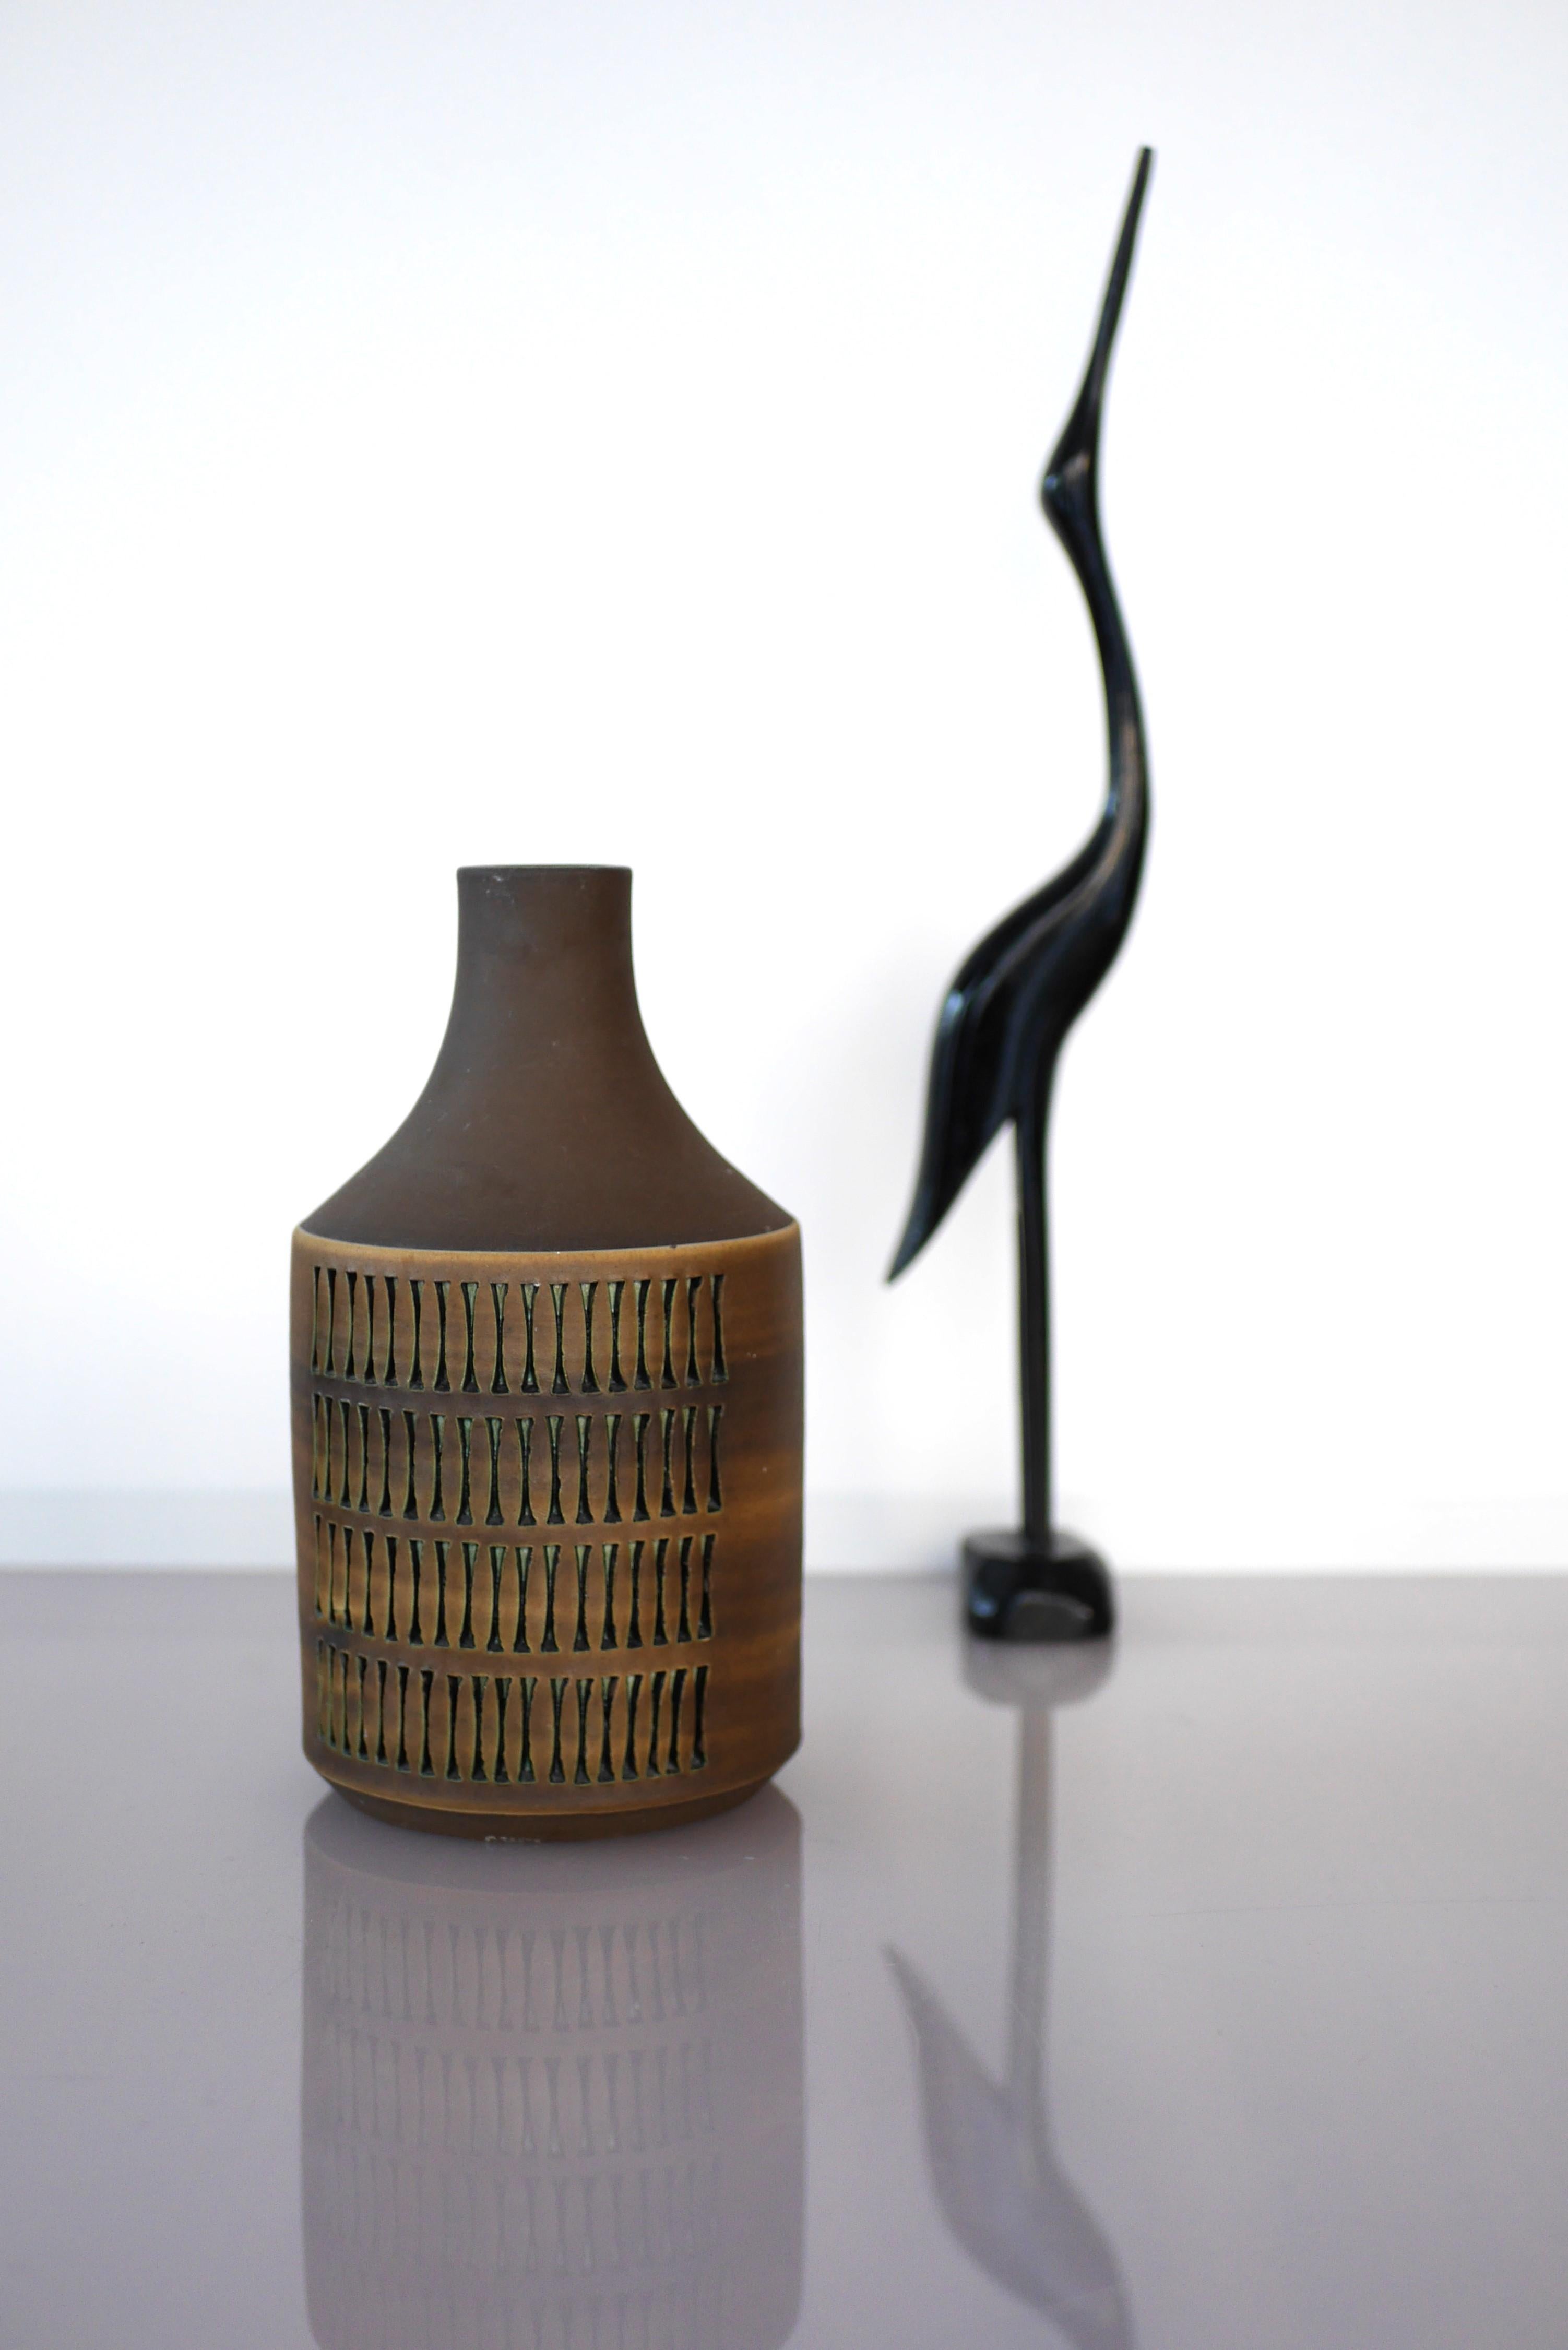 Ceramic Vase from Alingsås, Sweden by Tomas Anagrius